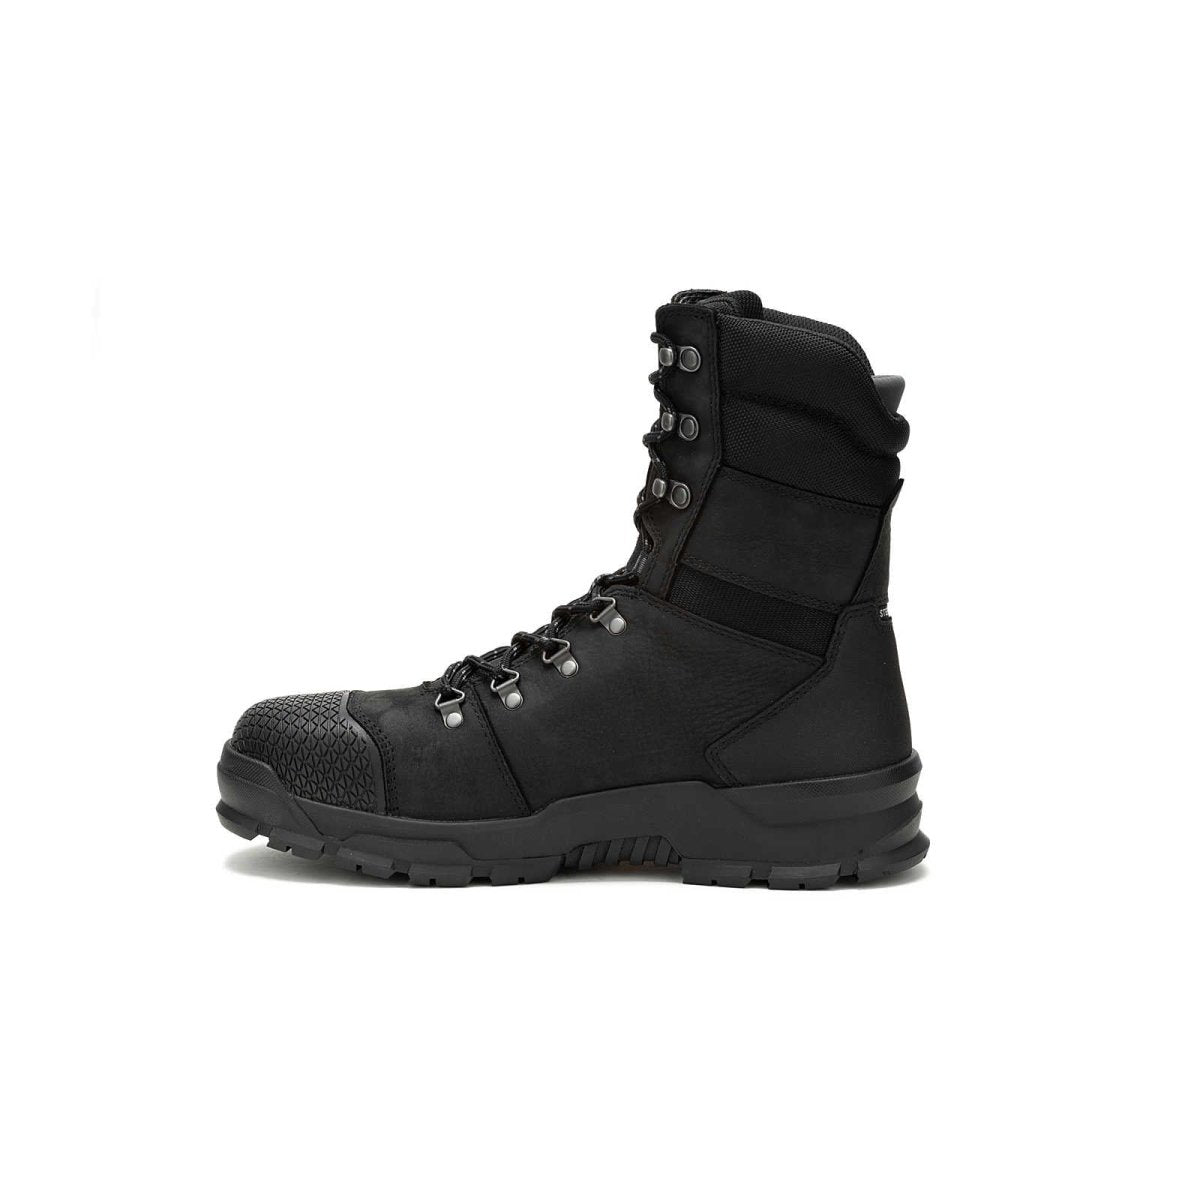 CATERPILLAR ACCOMPLICE X 8" WATERPROOF STEEL TOE MEN'S WORK BOOT (P91641) IN BLACK - TLW Shoes